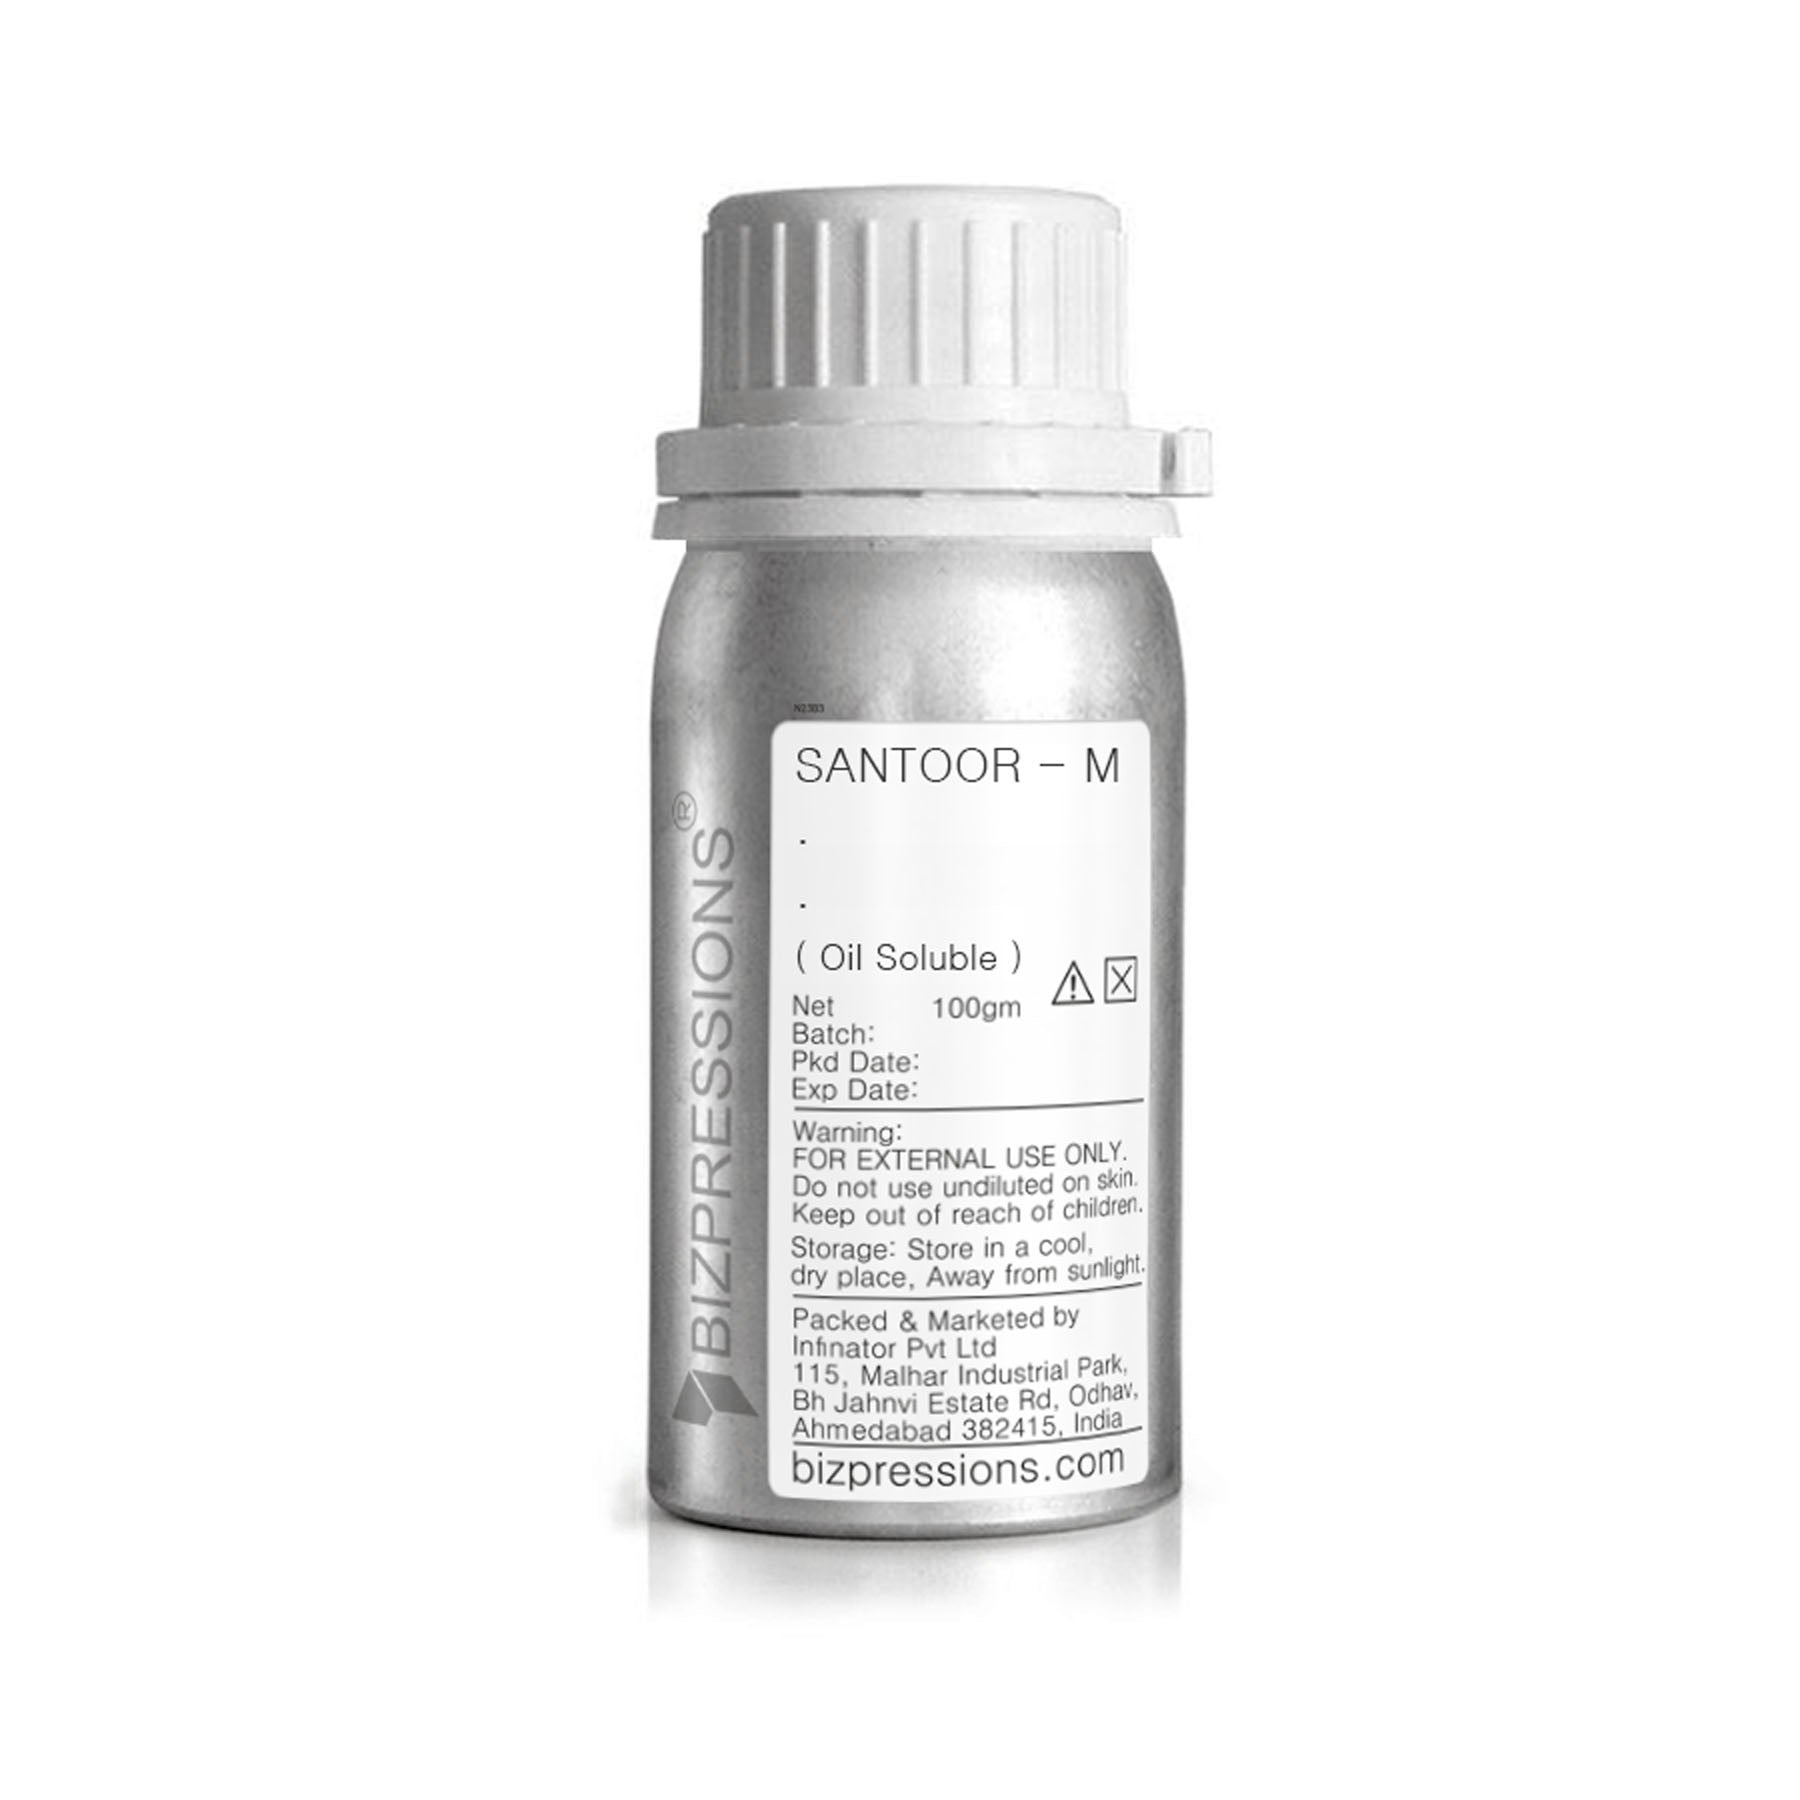 SANTOOR - M - Fragrance ( Oil Soluble ) - 100 gm